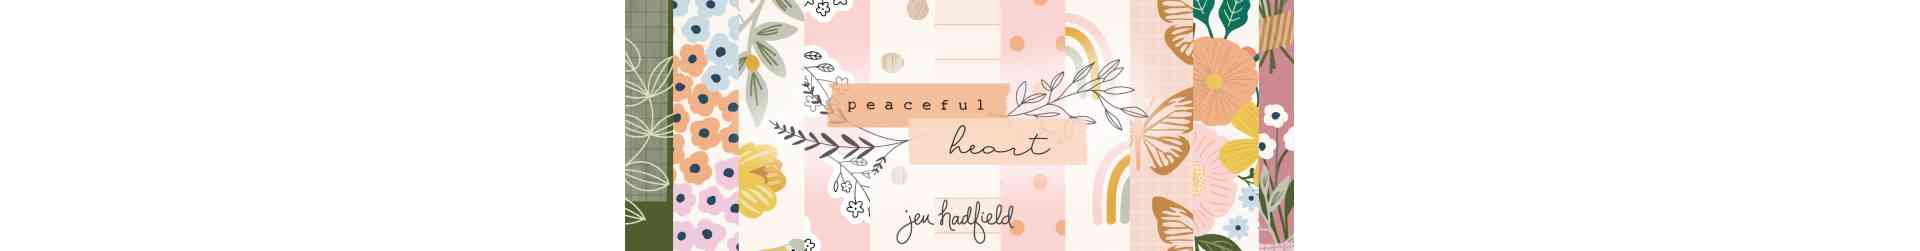 Peaceful Heart